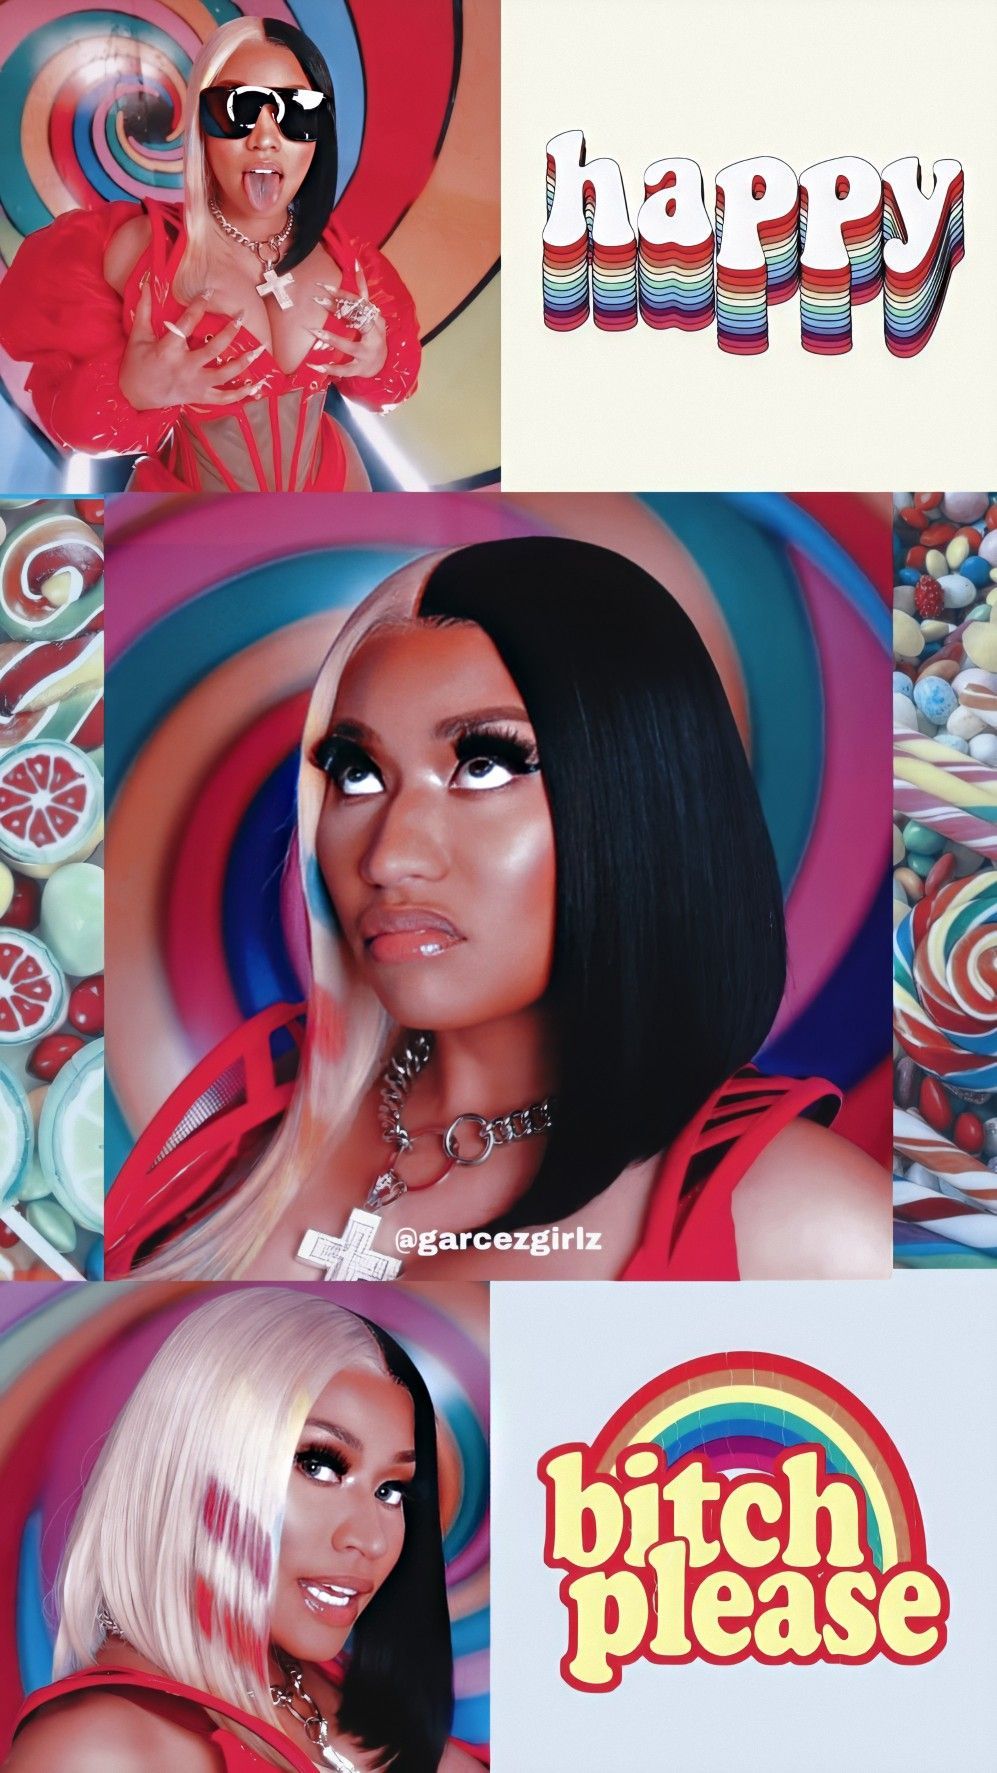 Nicki Minaj Wallpaper. Nicki minaj photo, Nicki minaj wallpaper, Nicki minaj picture